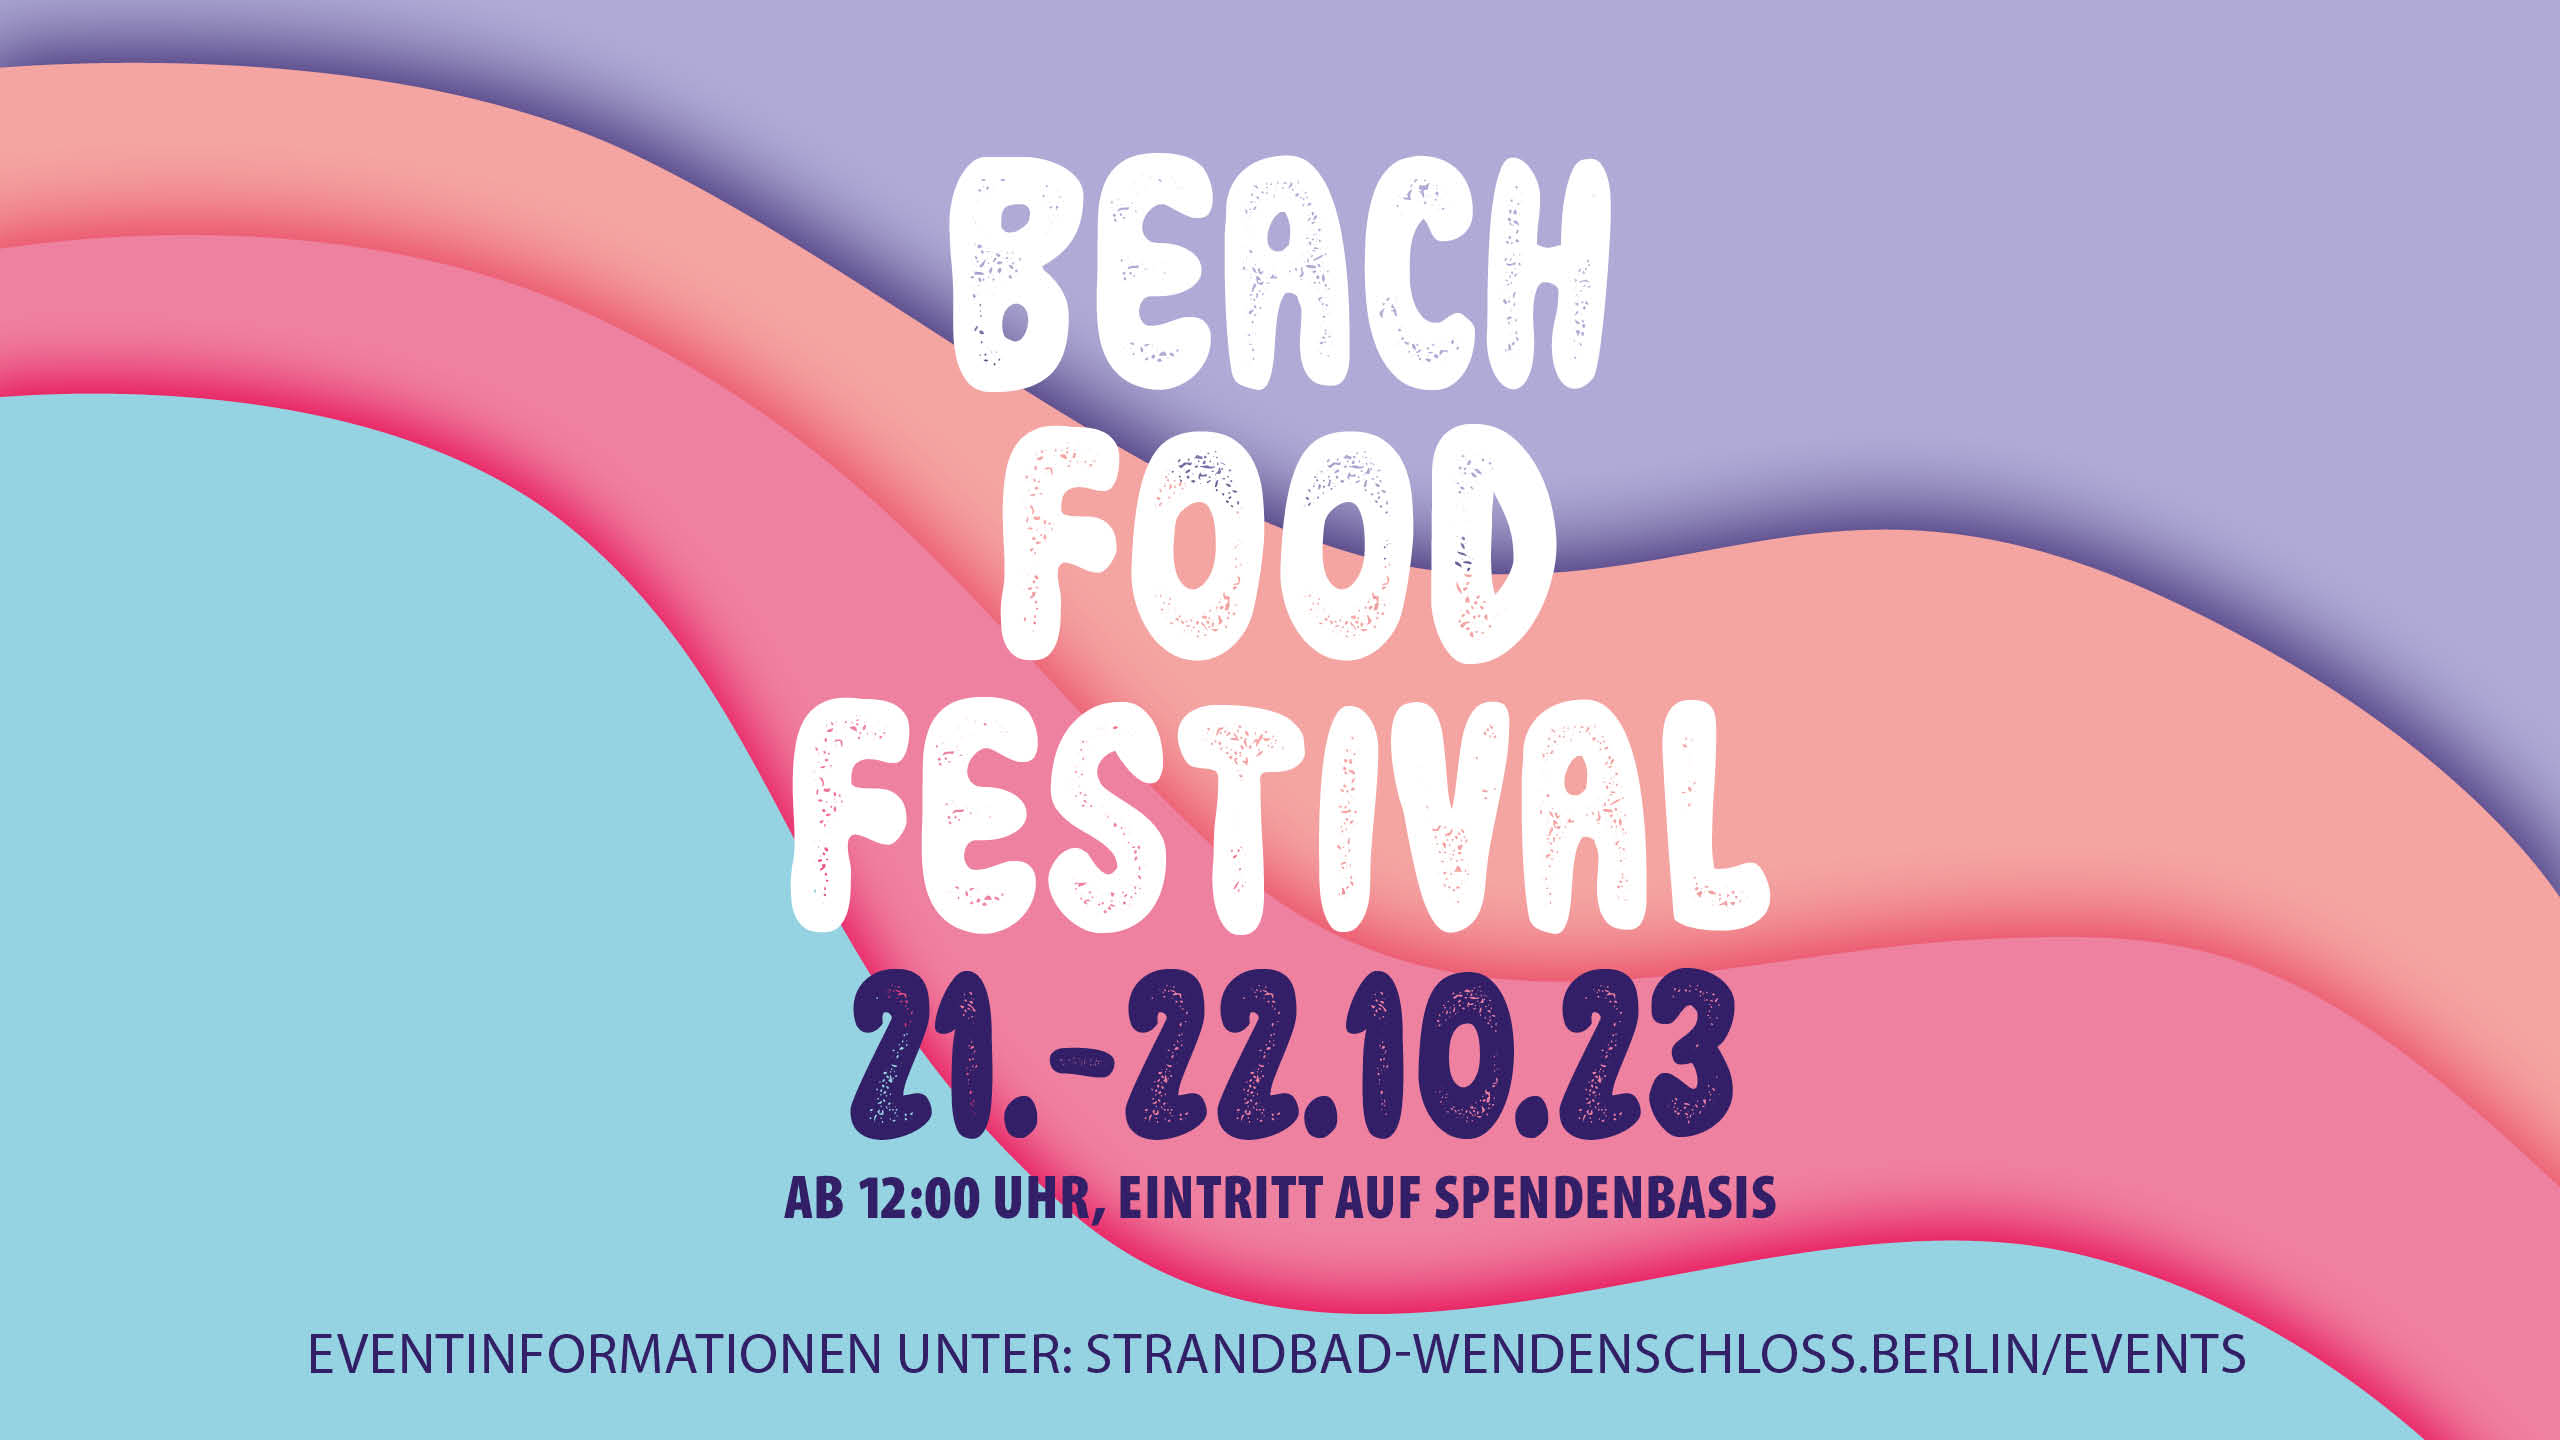 Origami Workshops at Beachfood Festival Berlin